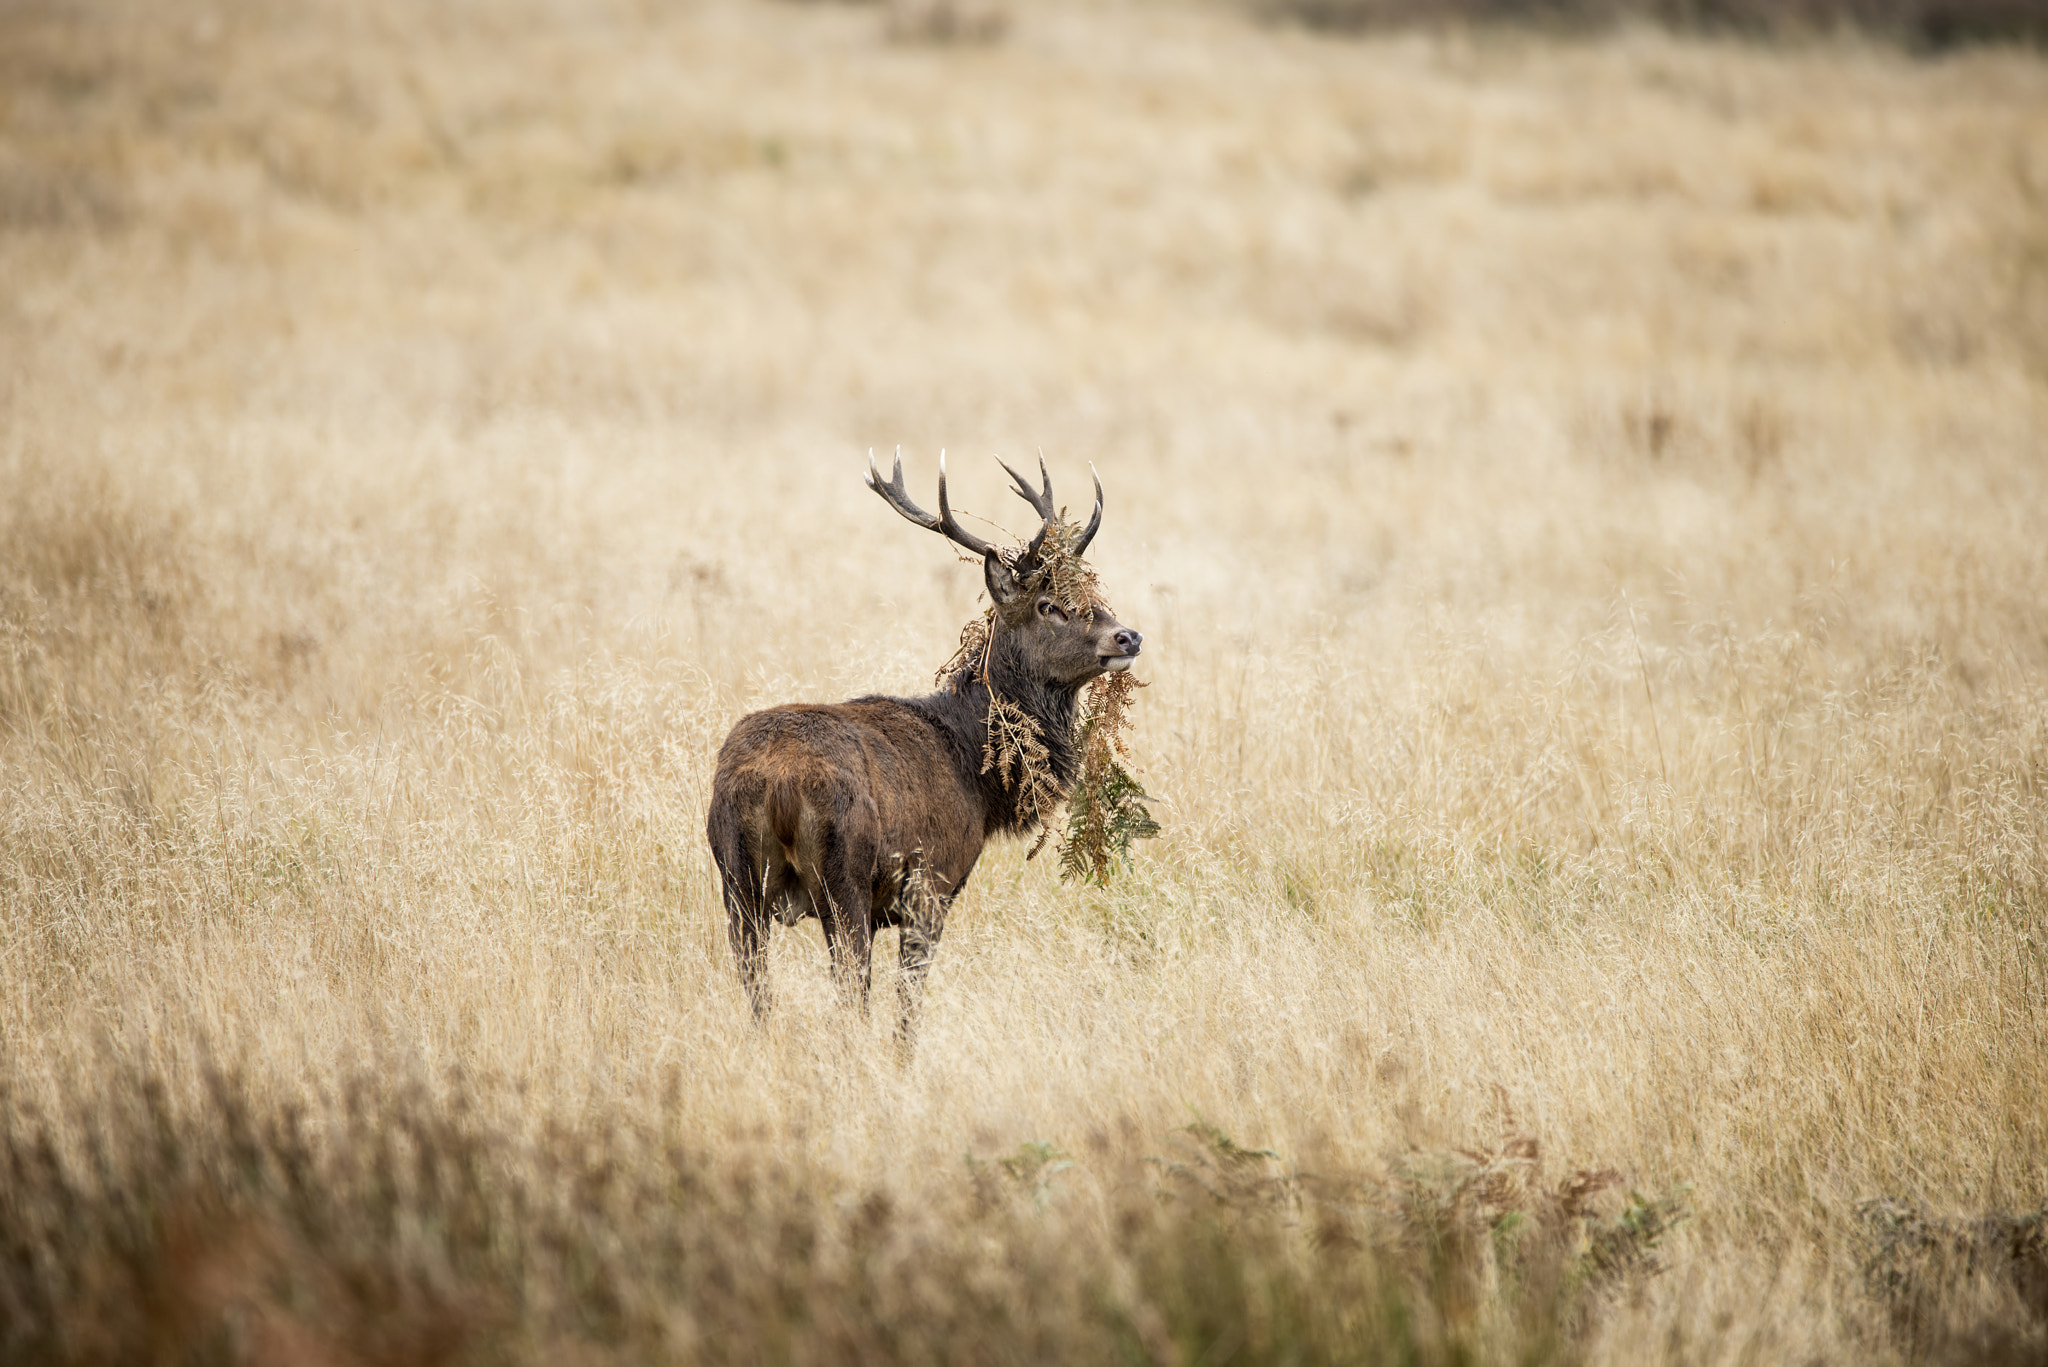 Nikon D800 + Sigma 150-600mm F5-6.3 DG OS HSM | C sample photo. Majestic powerful red deer stag cervus elaphus in forest landsca photography